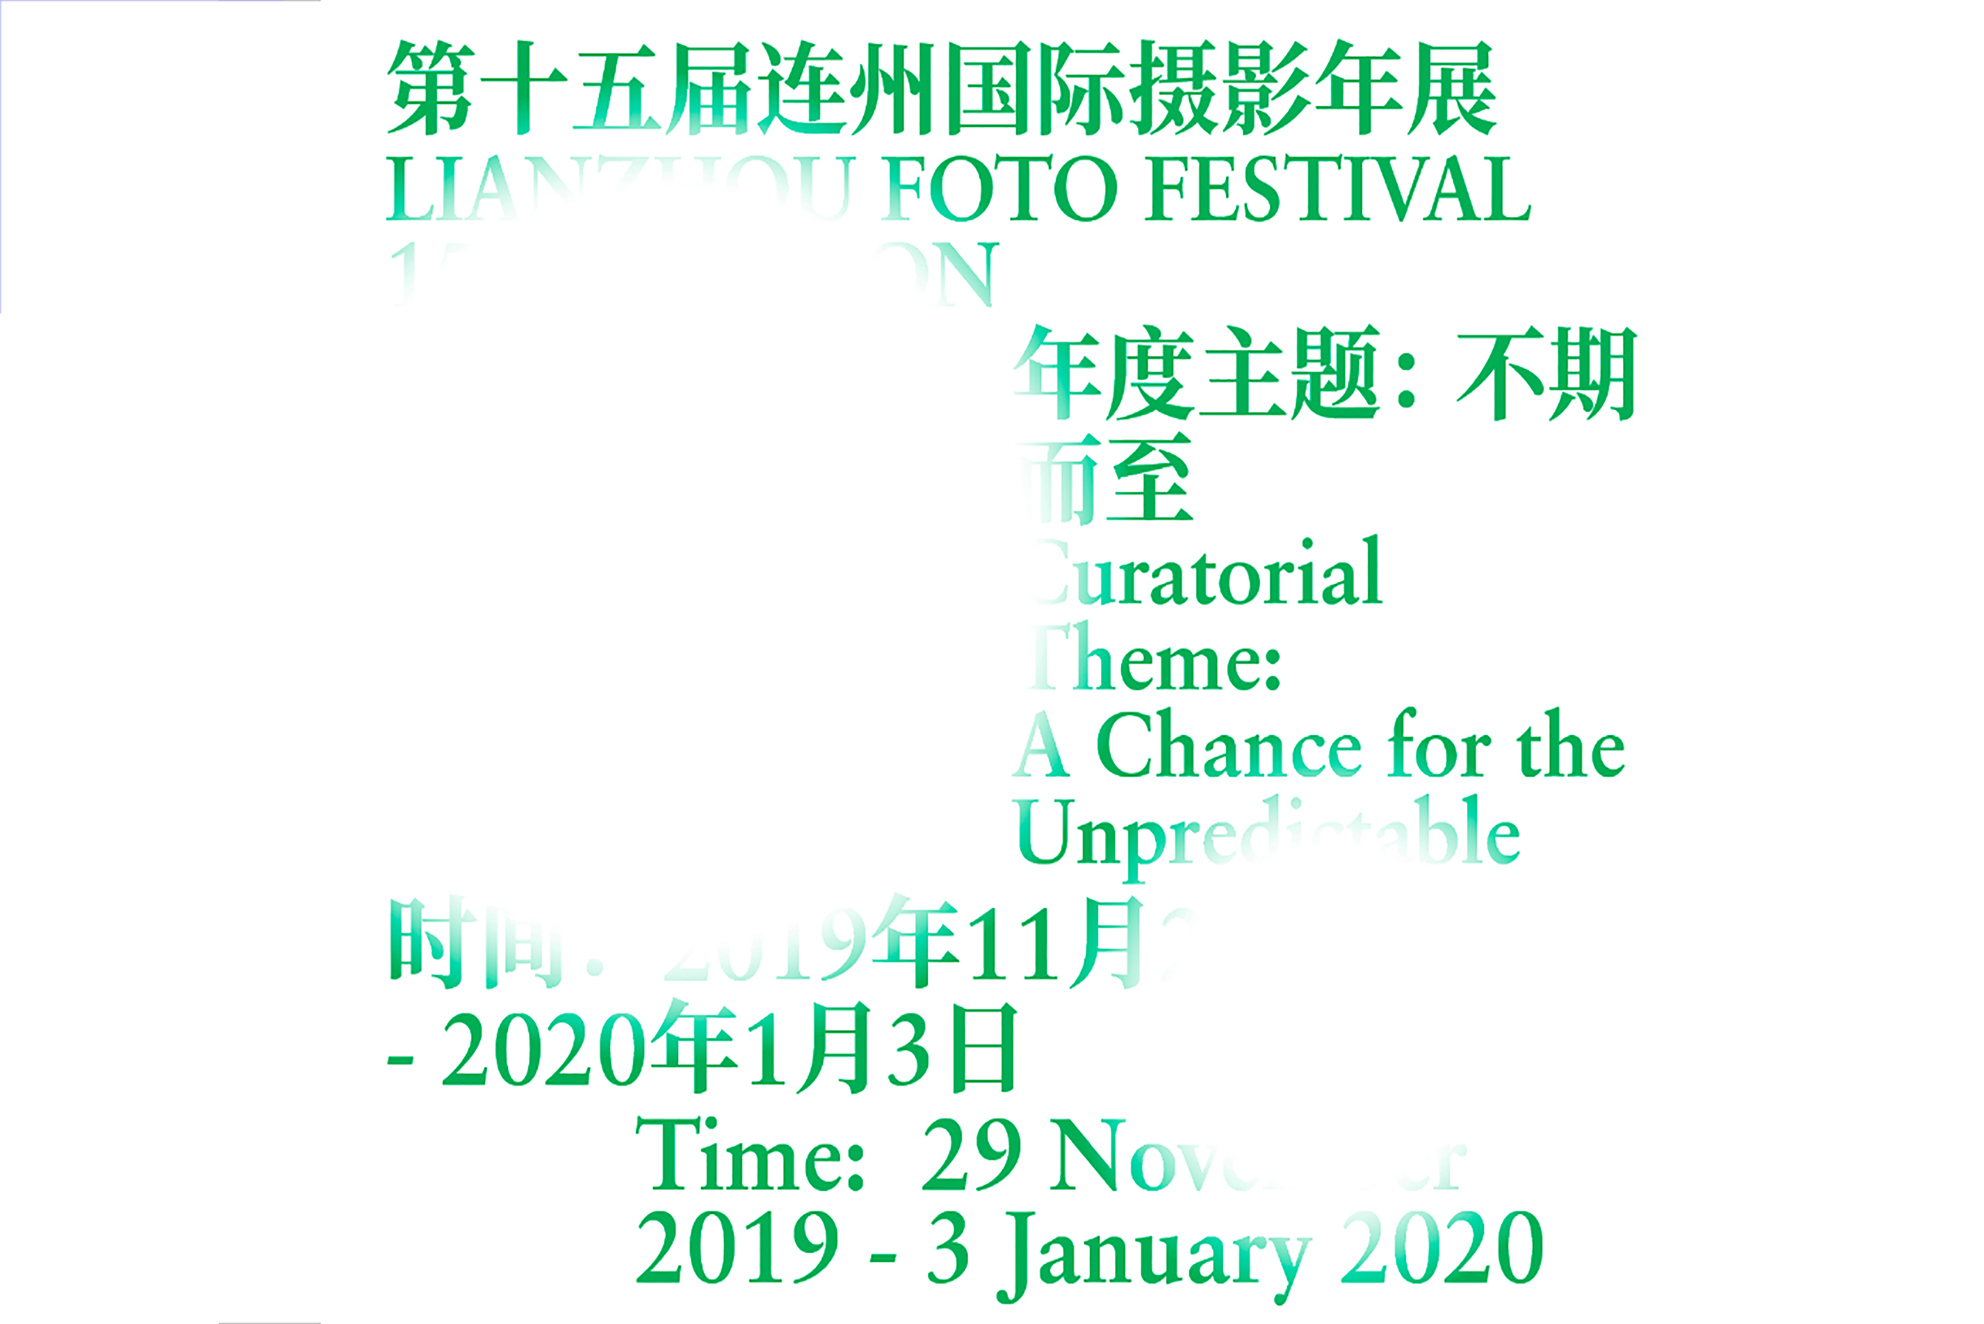 Exhibition’s flyer